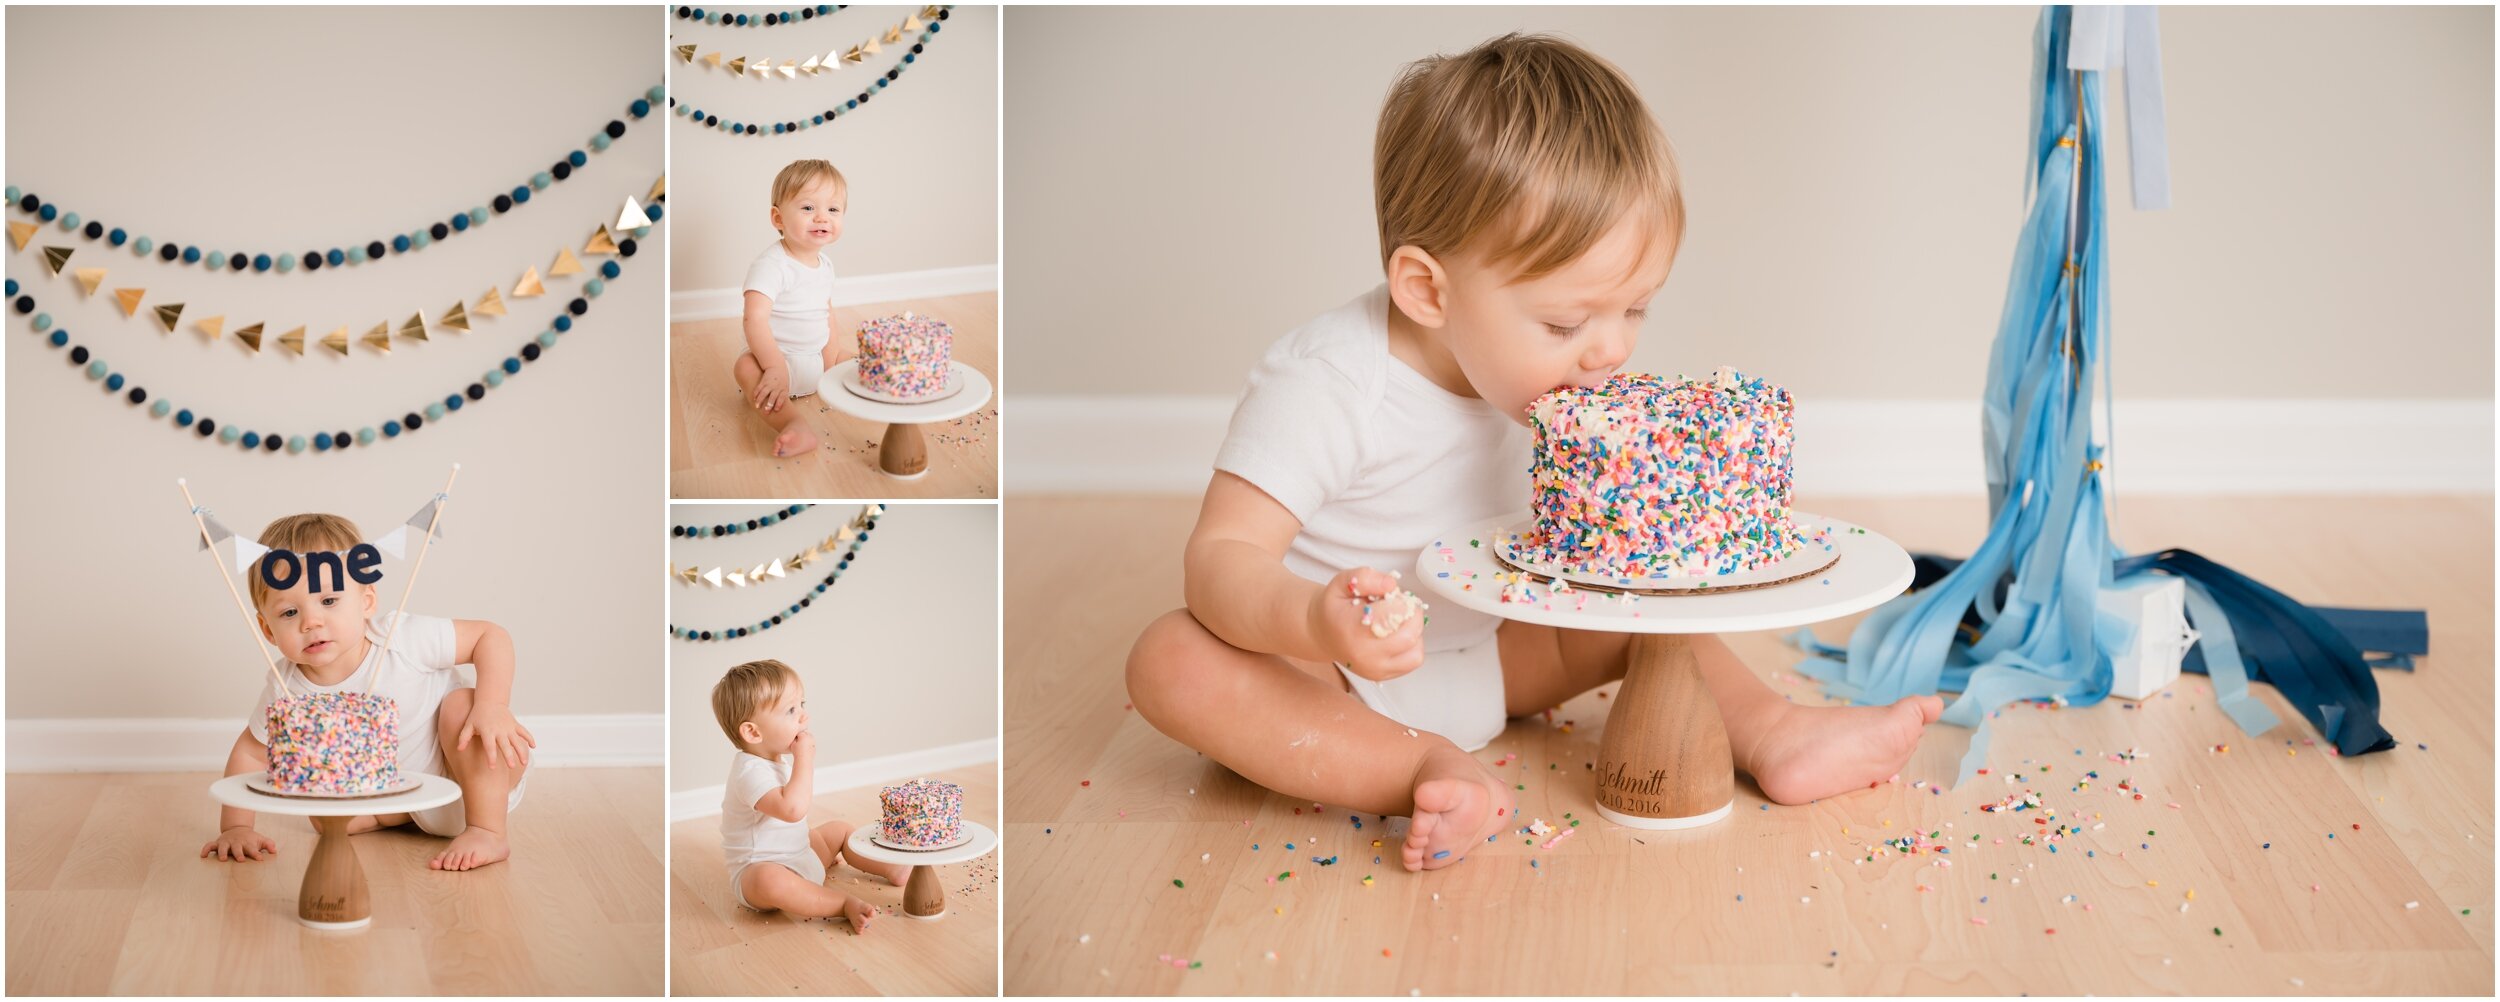 Baby first birthday smash cake